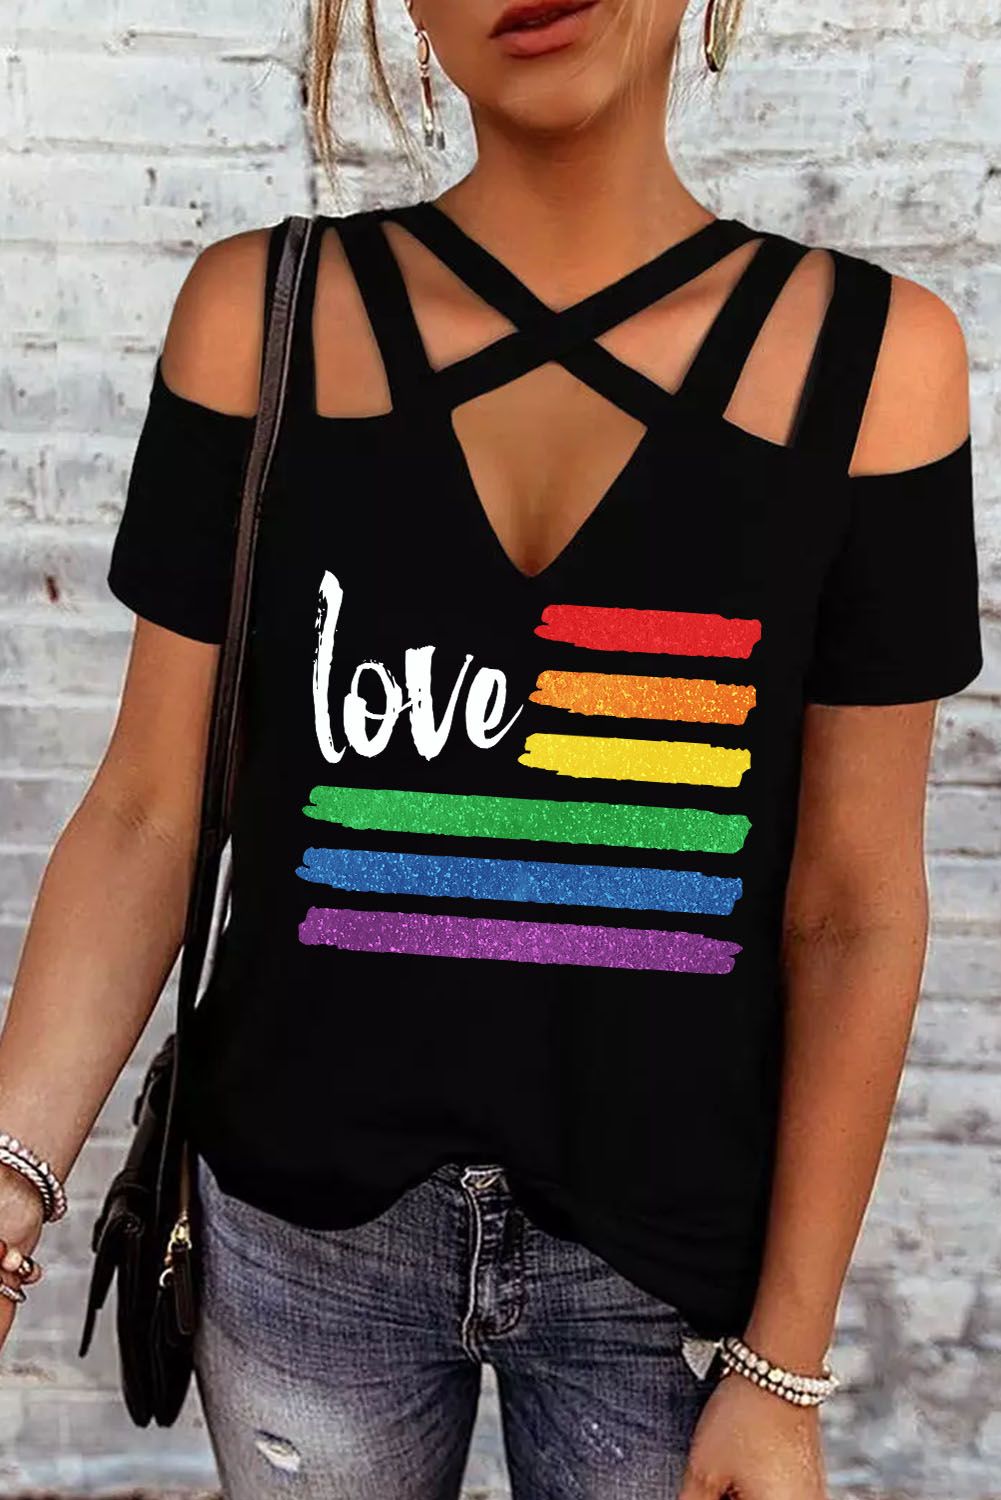 LC25121581-2-S, LC25121581-2-M, LC25121581-2-L, LC25121581-2-XL, LC25121581-2-2XL, Black Womens Summer Shirts Love Gay Pride Print Criss Cross Cold Shoulder Tops Blouse